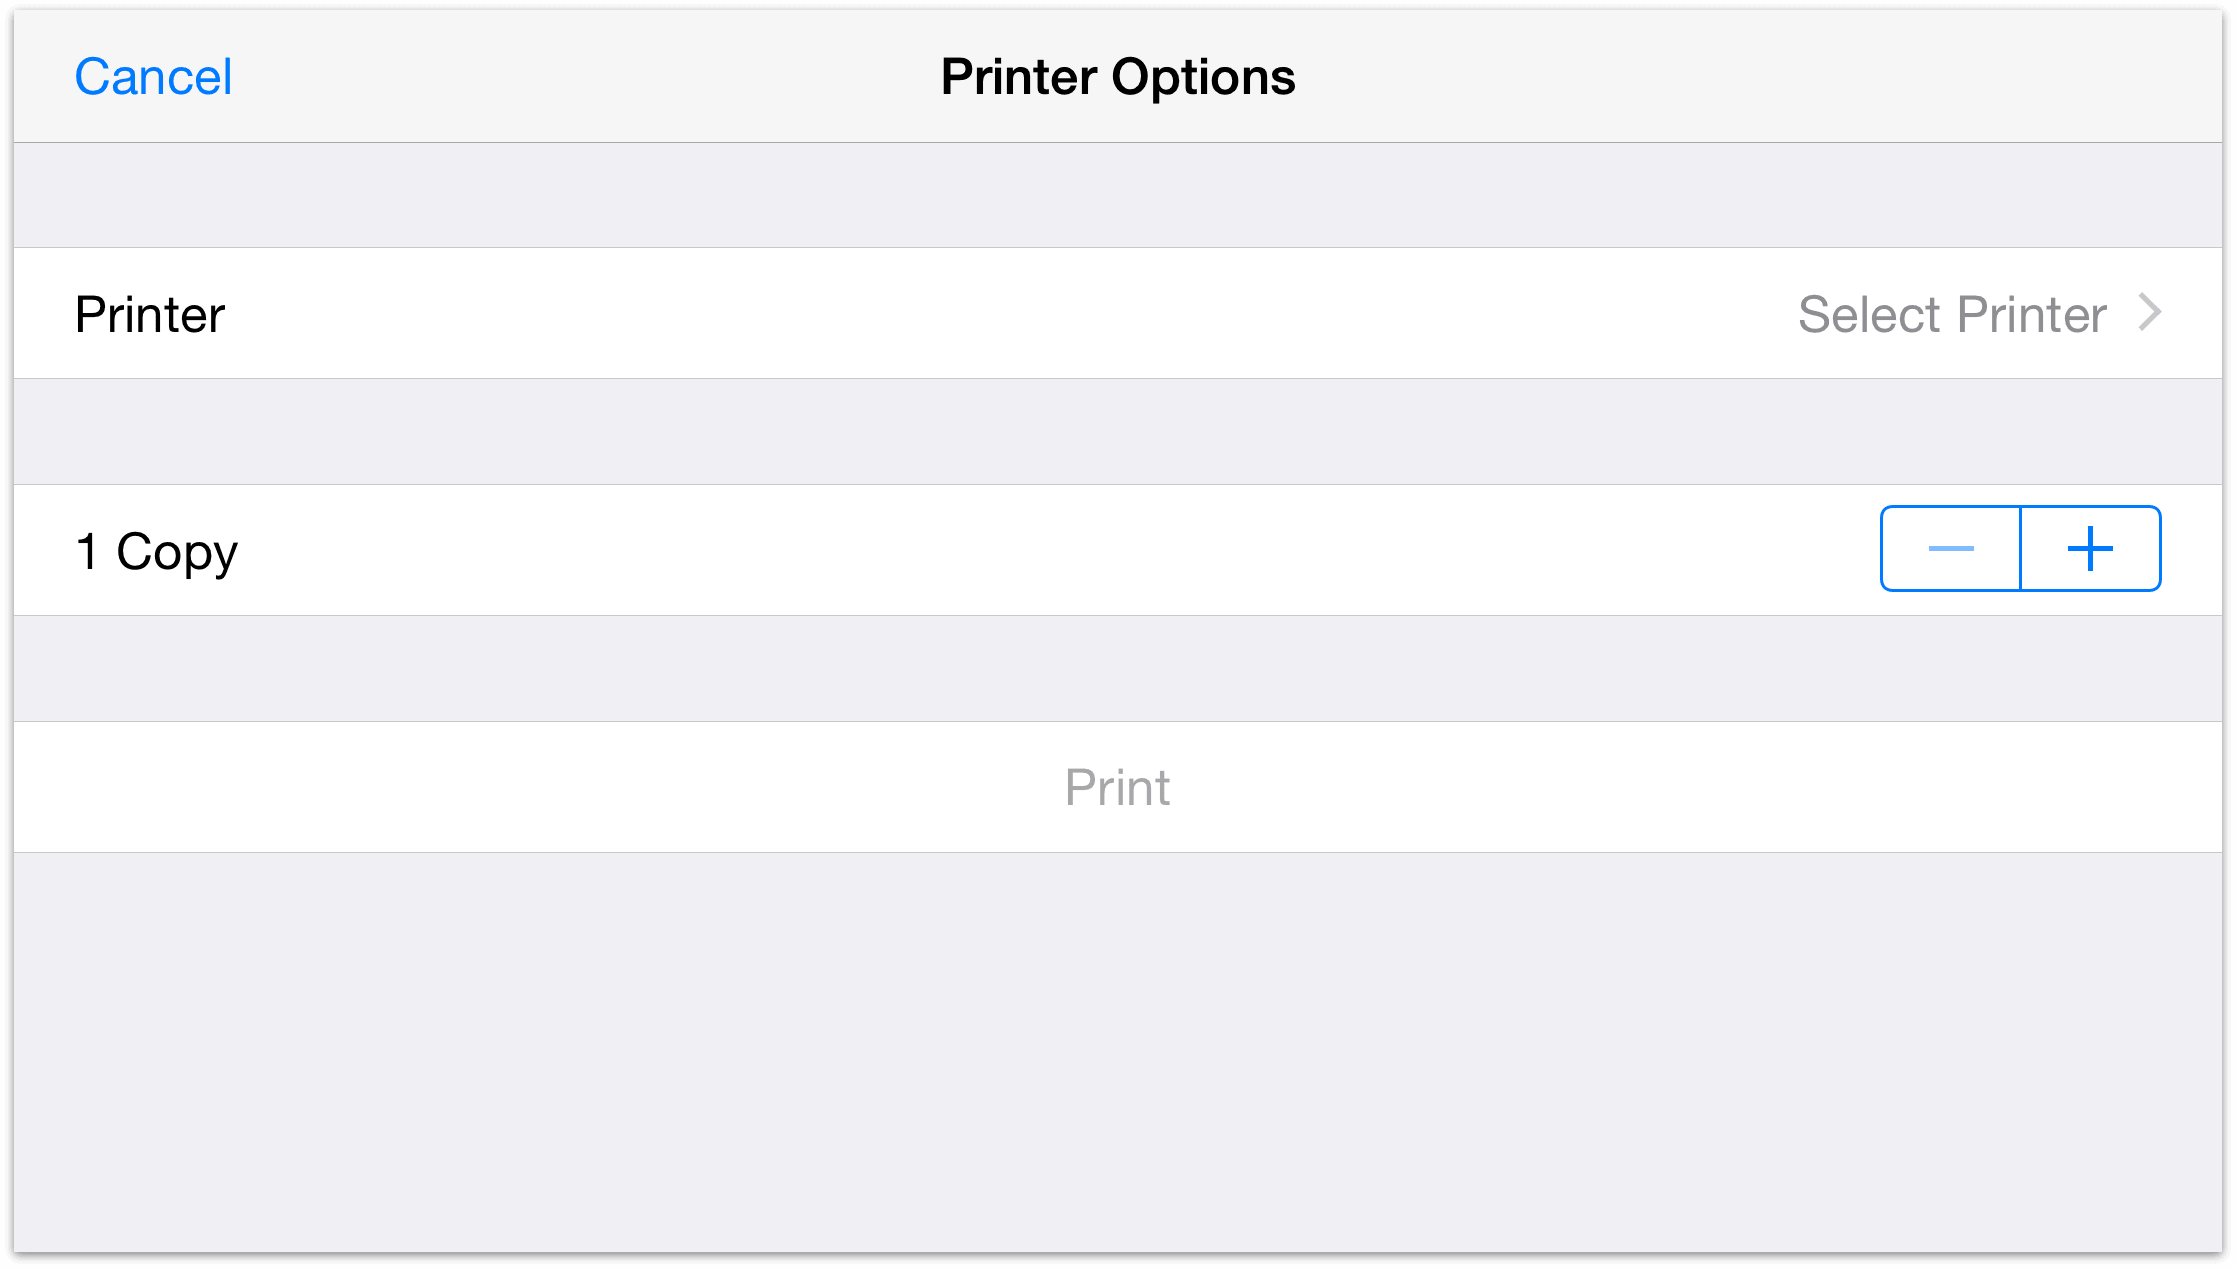 The Print Settings Screen